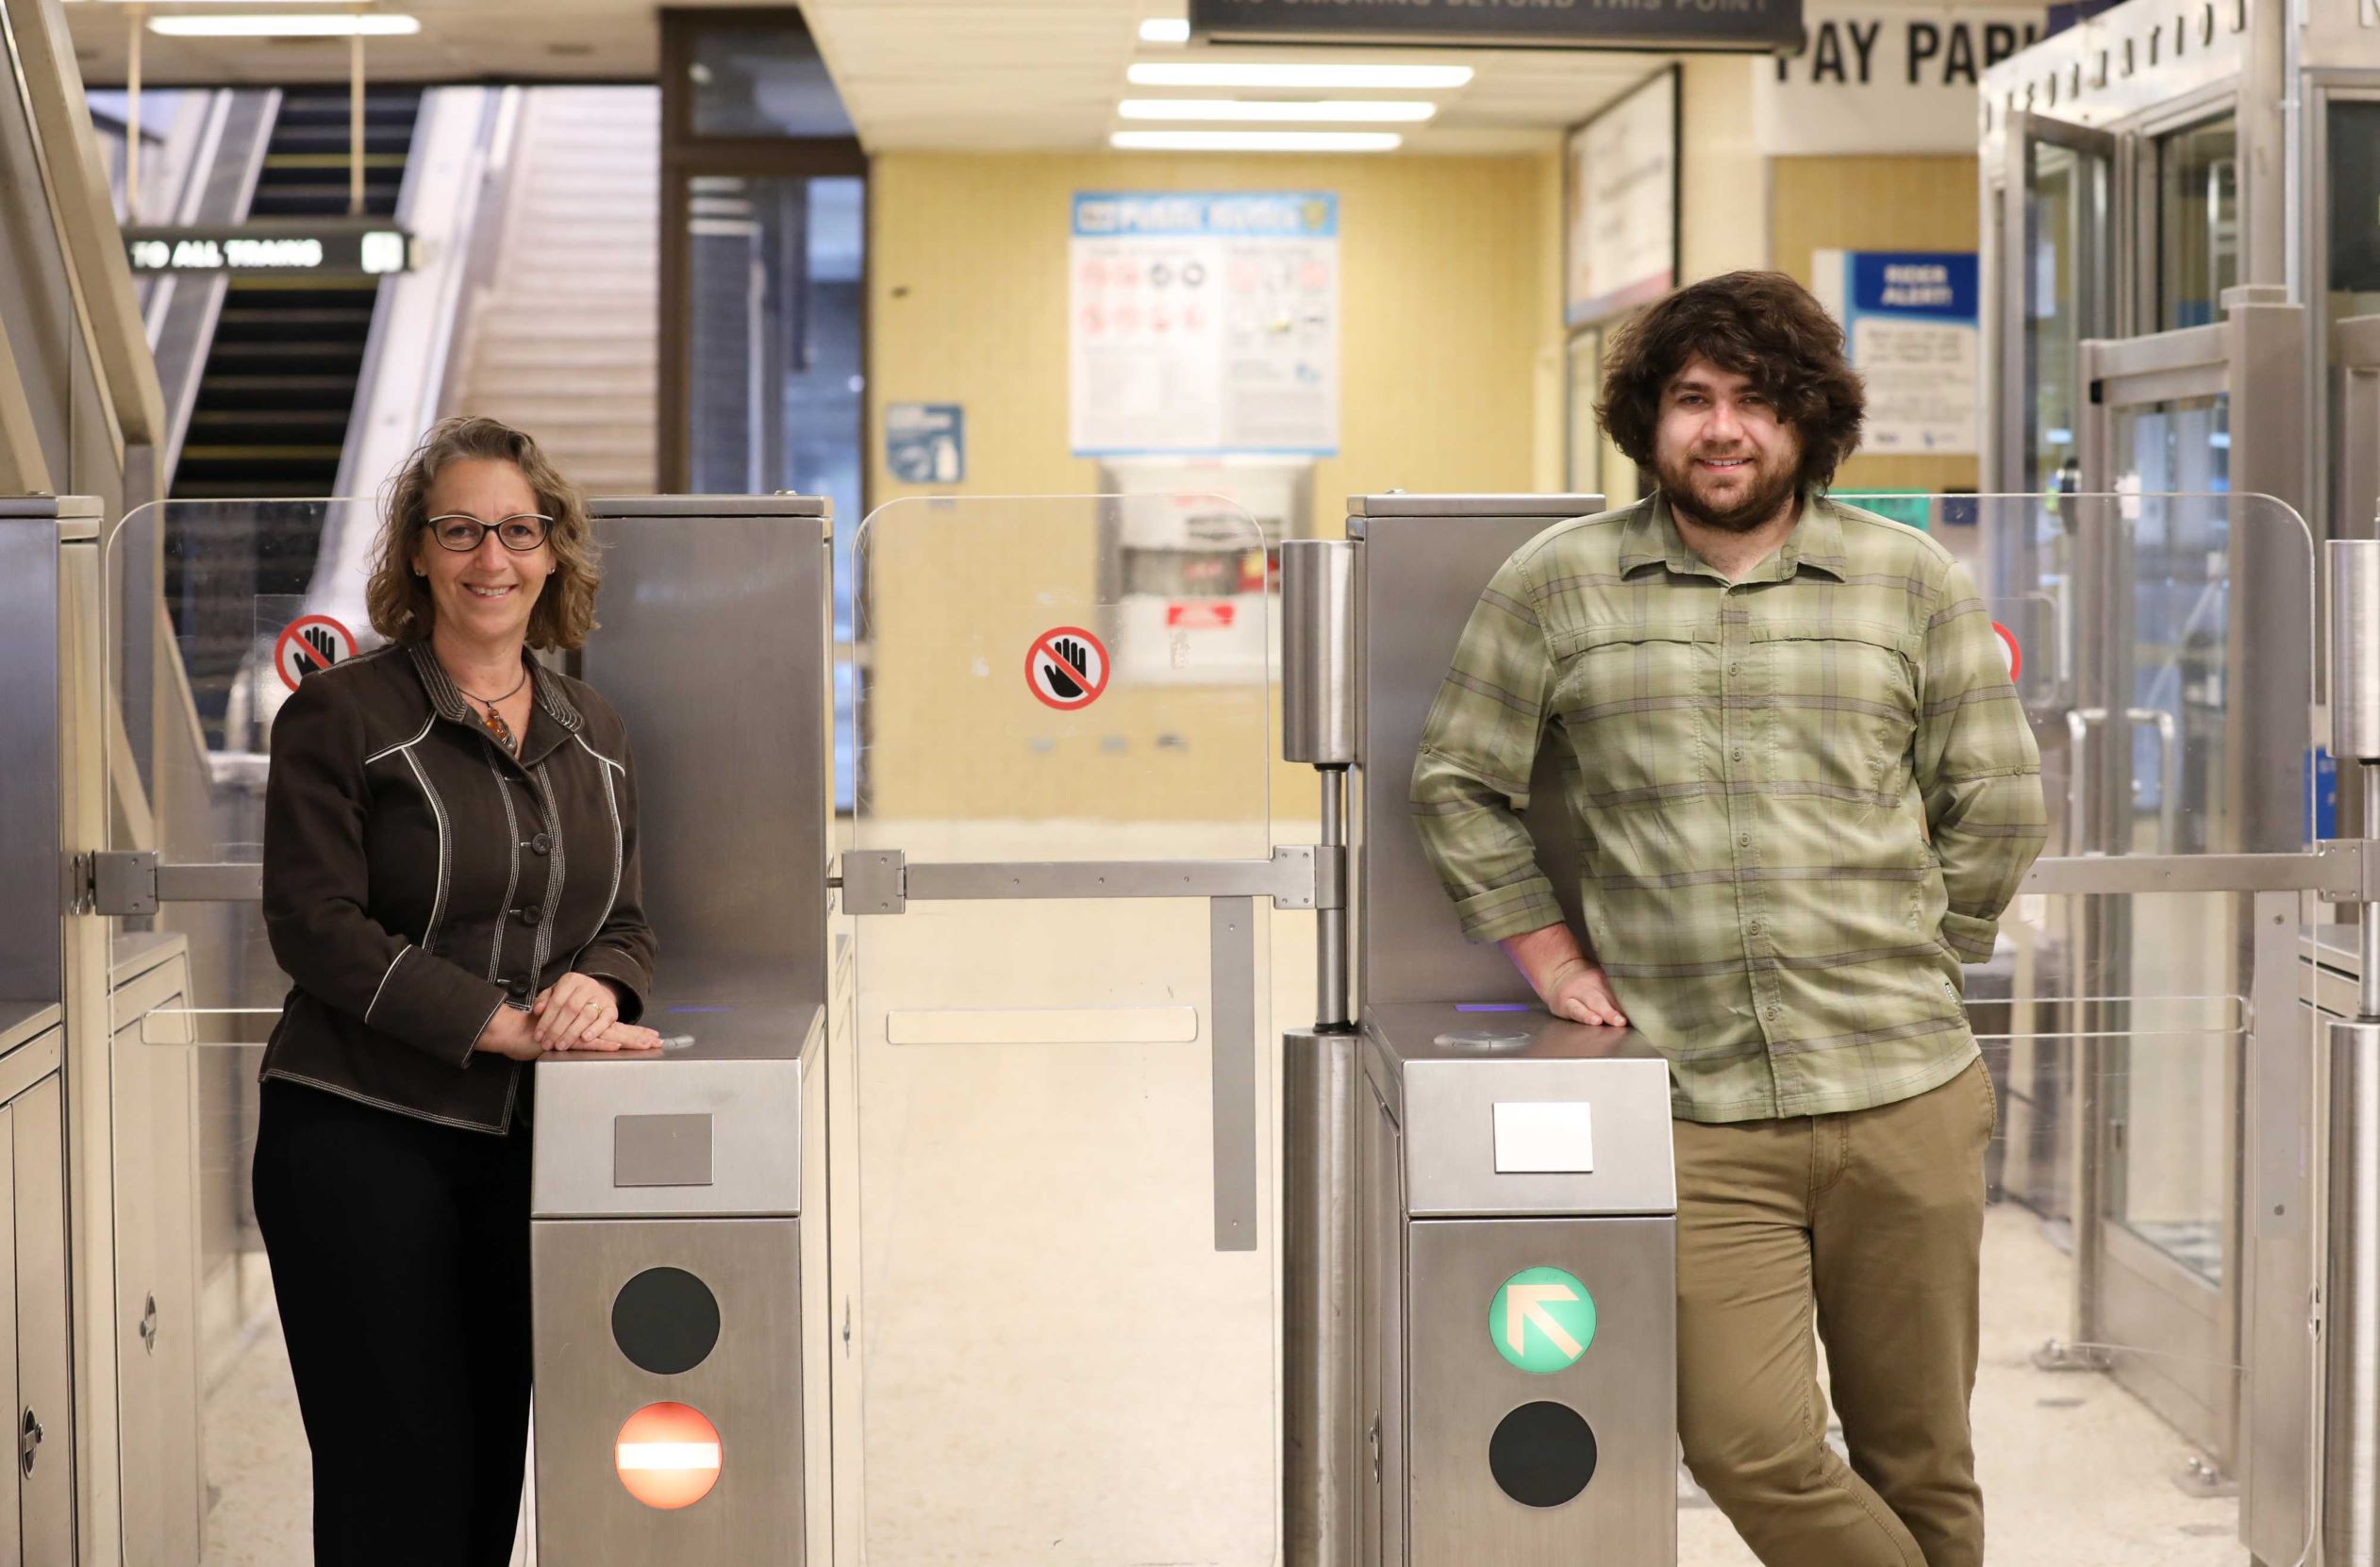 Wendy Wheeler, left, and Jeffrey Martz, right, pose next to the Rockridge Station fare gates